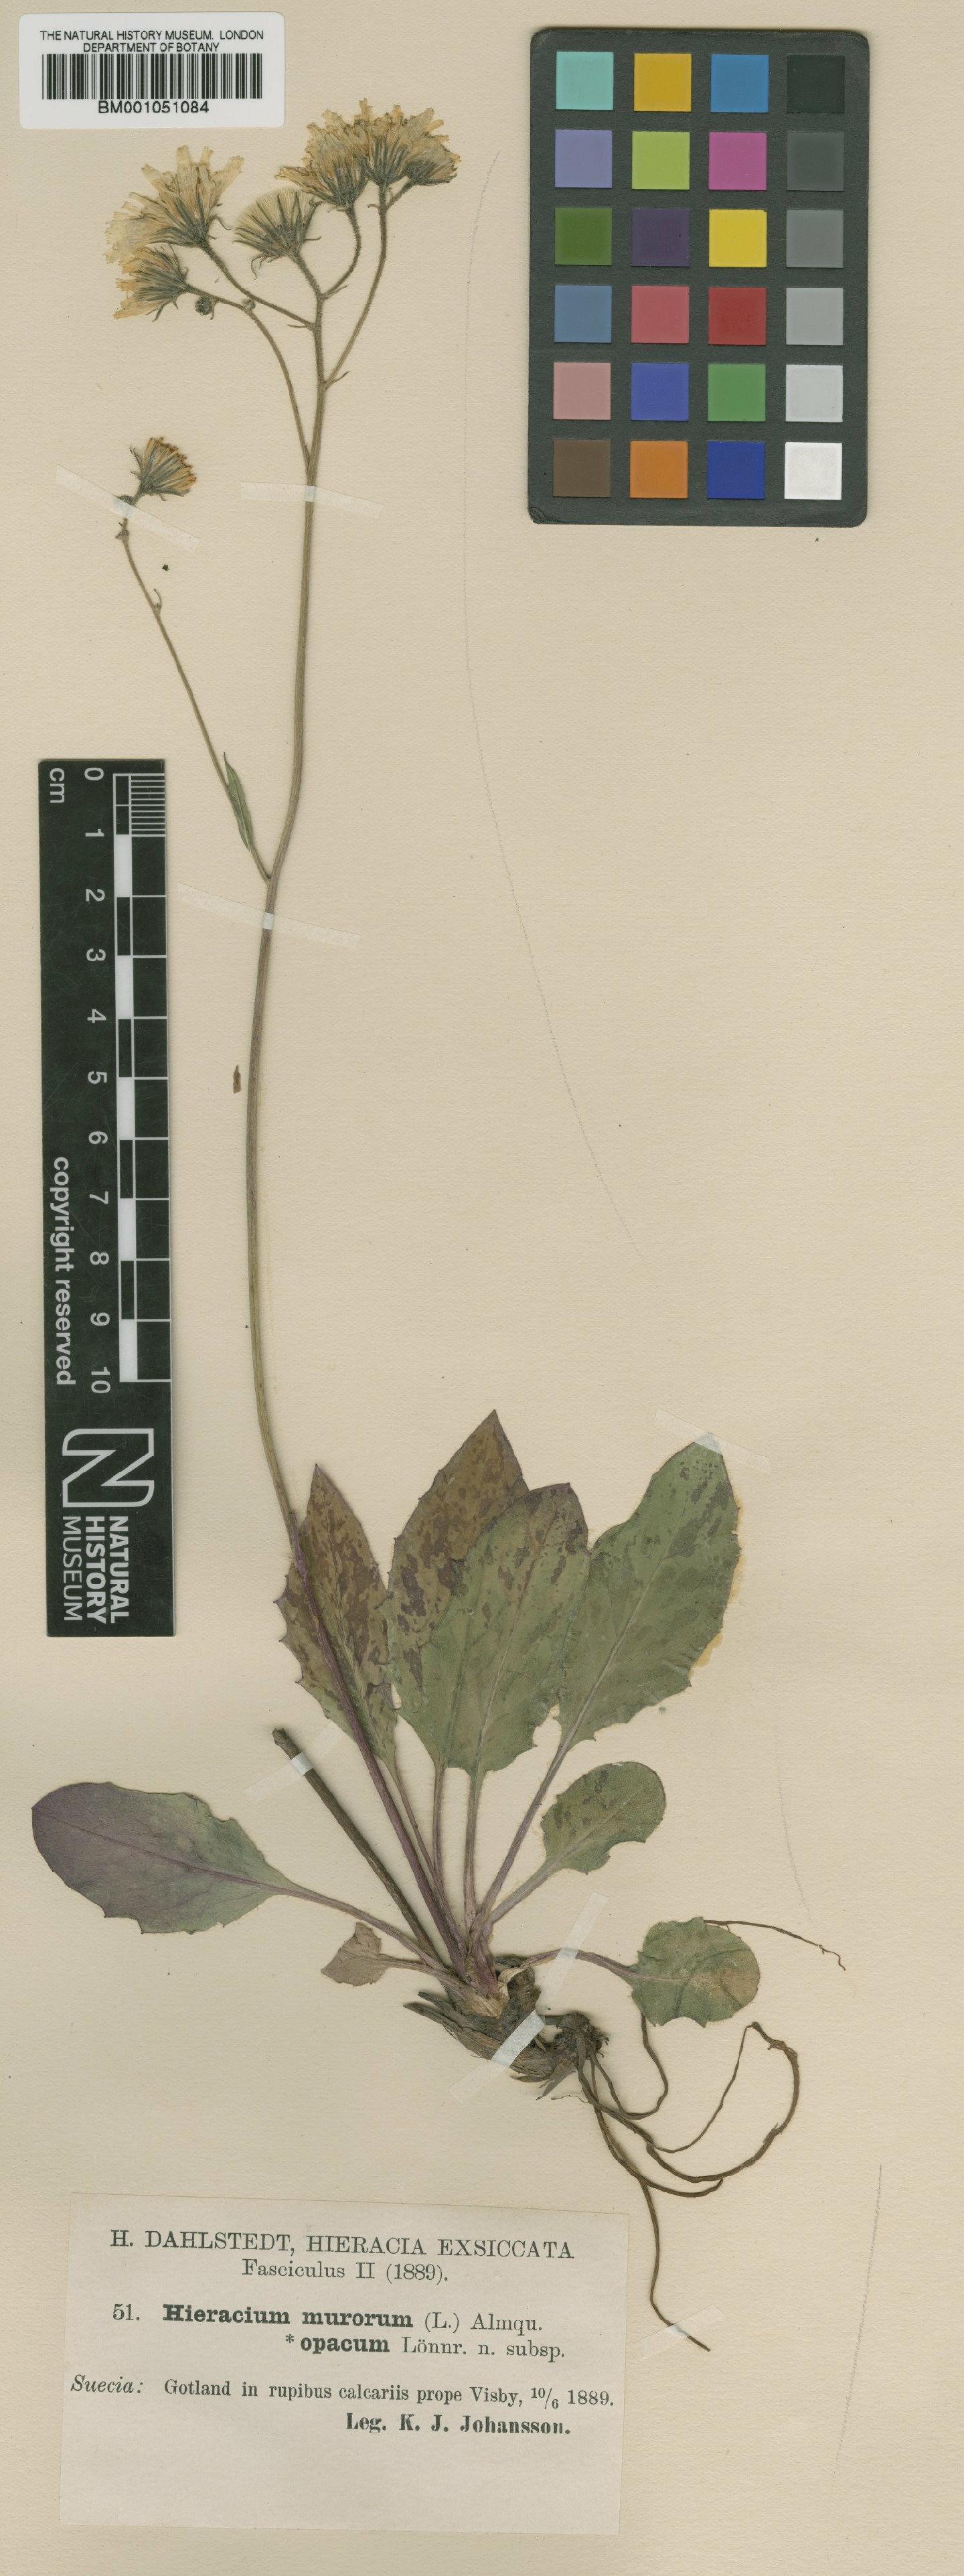 To NHMUK collection (Hieracium caesium subsp. opacum (Lönnr.) Zahn; TYPE; NHMUK:ecatalogue:2421265)